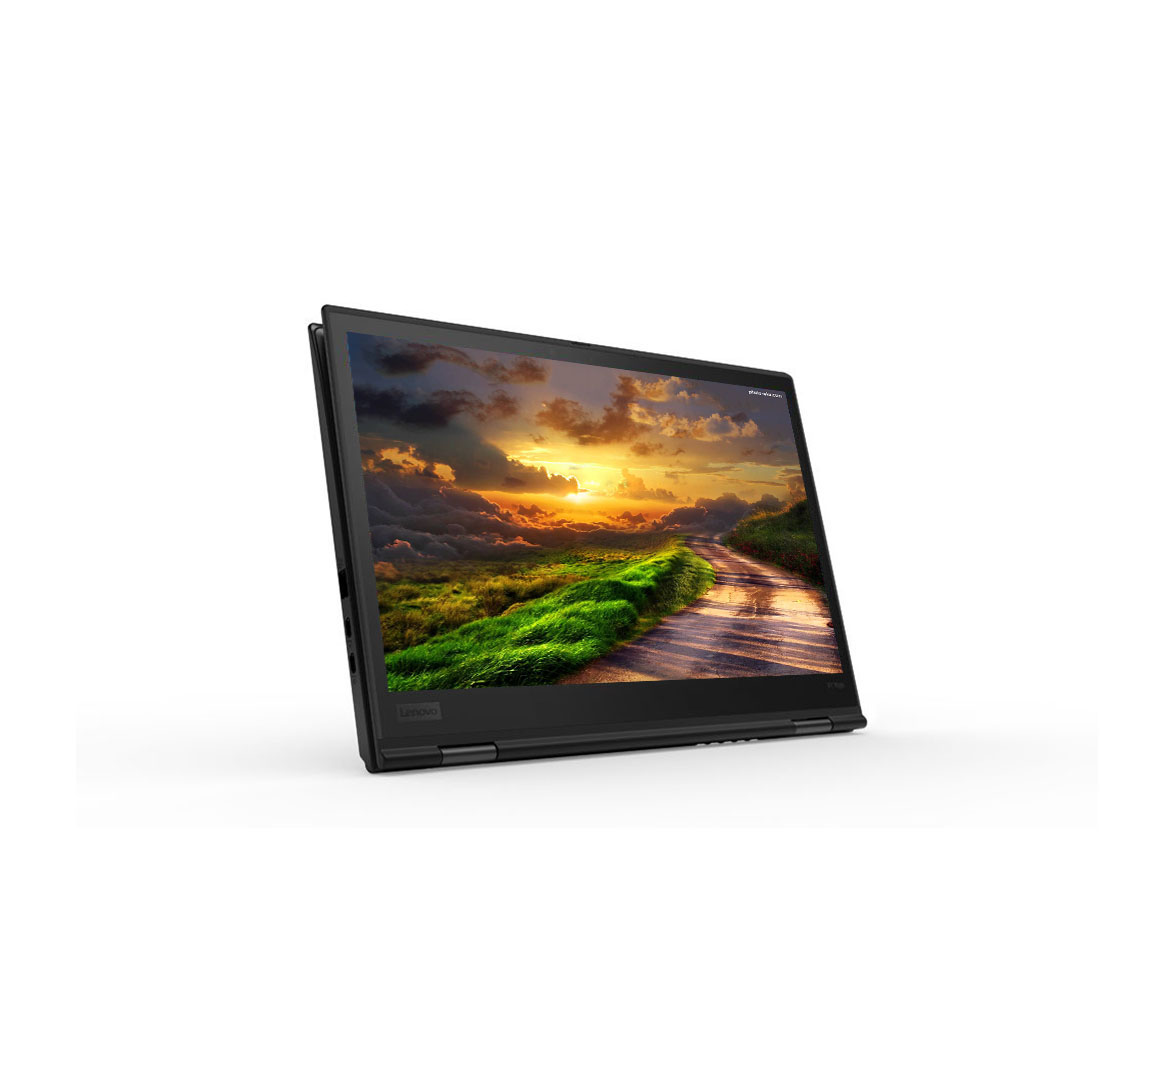 Lenovo ThinkPad x1 yoga, Intel Core i5-8th Generation CPU, 8GB RAM, 256GB  SSD, 14 inch Touchscreen 360°, Windows 10 Pro